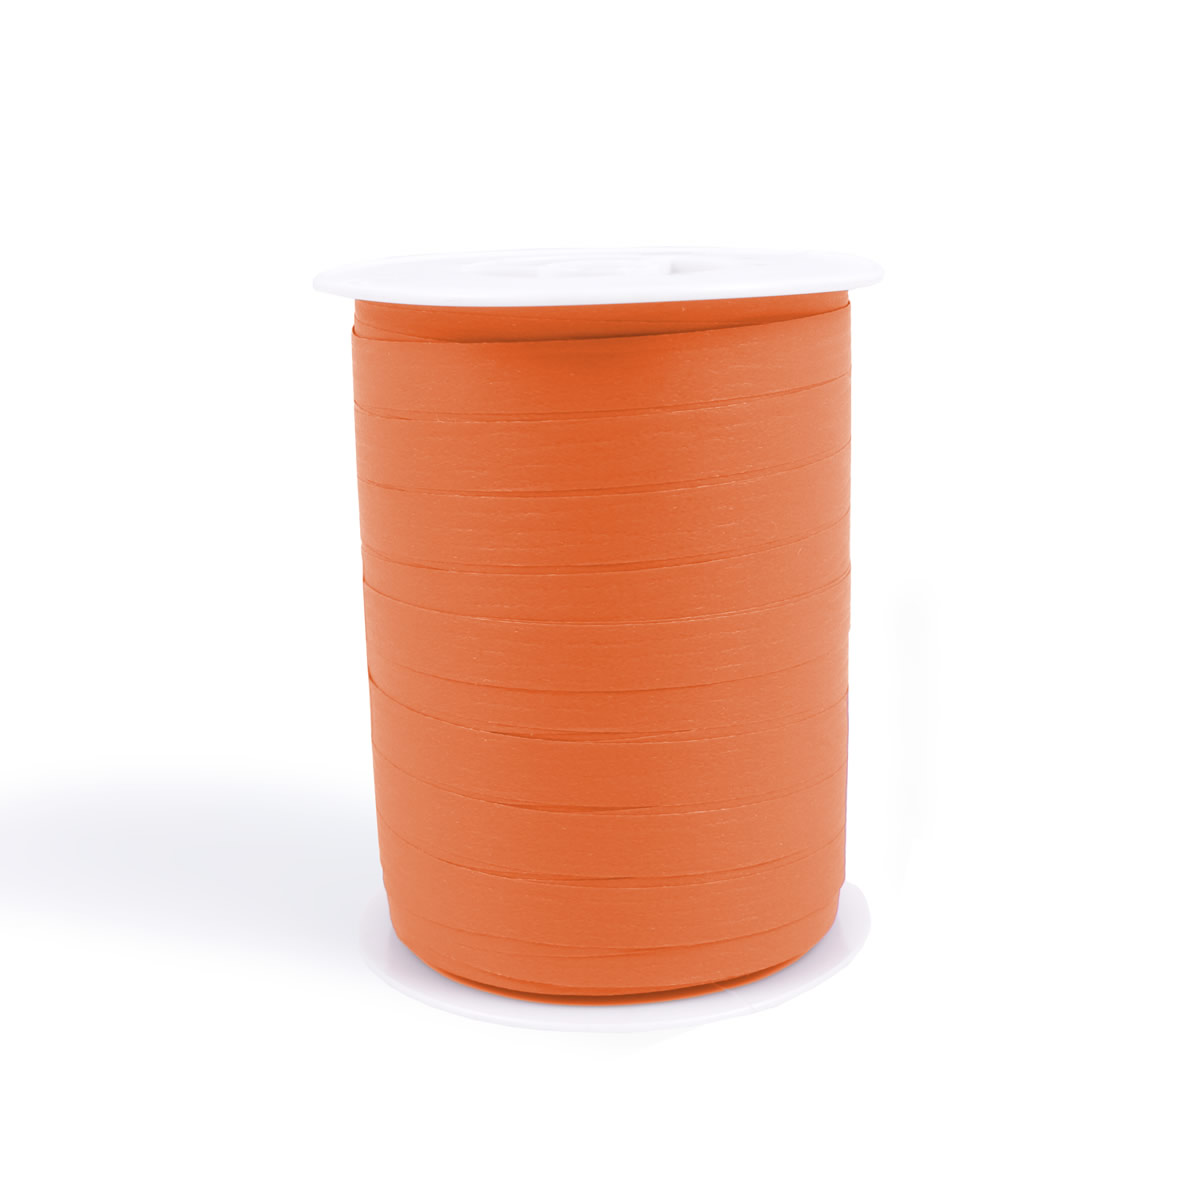 Paperlook krullint oranje 10 mm (250 meter)